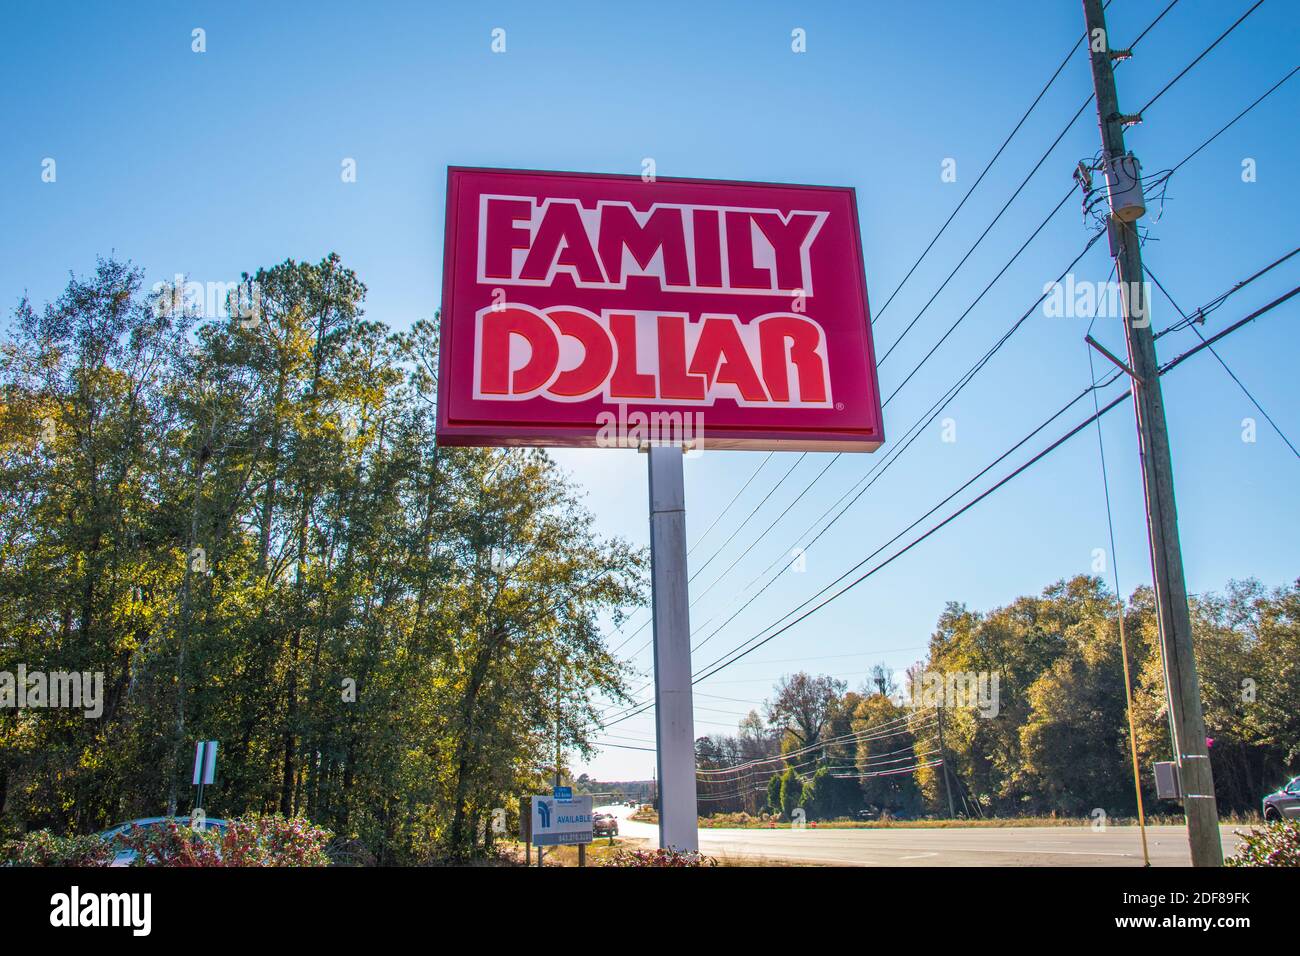 Augusta, Ga USA - 12 02 20: Family Dollar Retail Store street sign and traffic Stock Photo